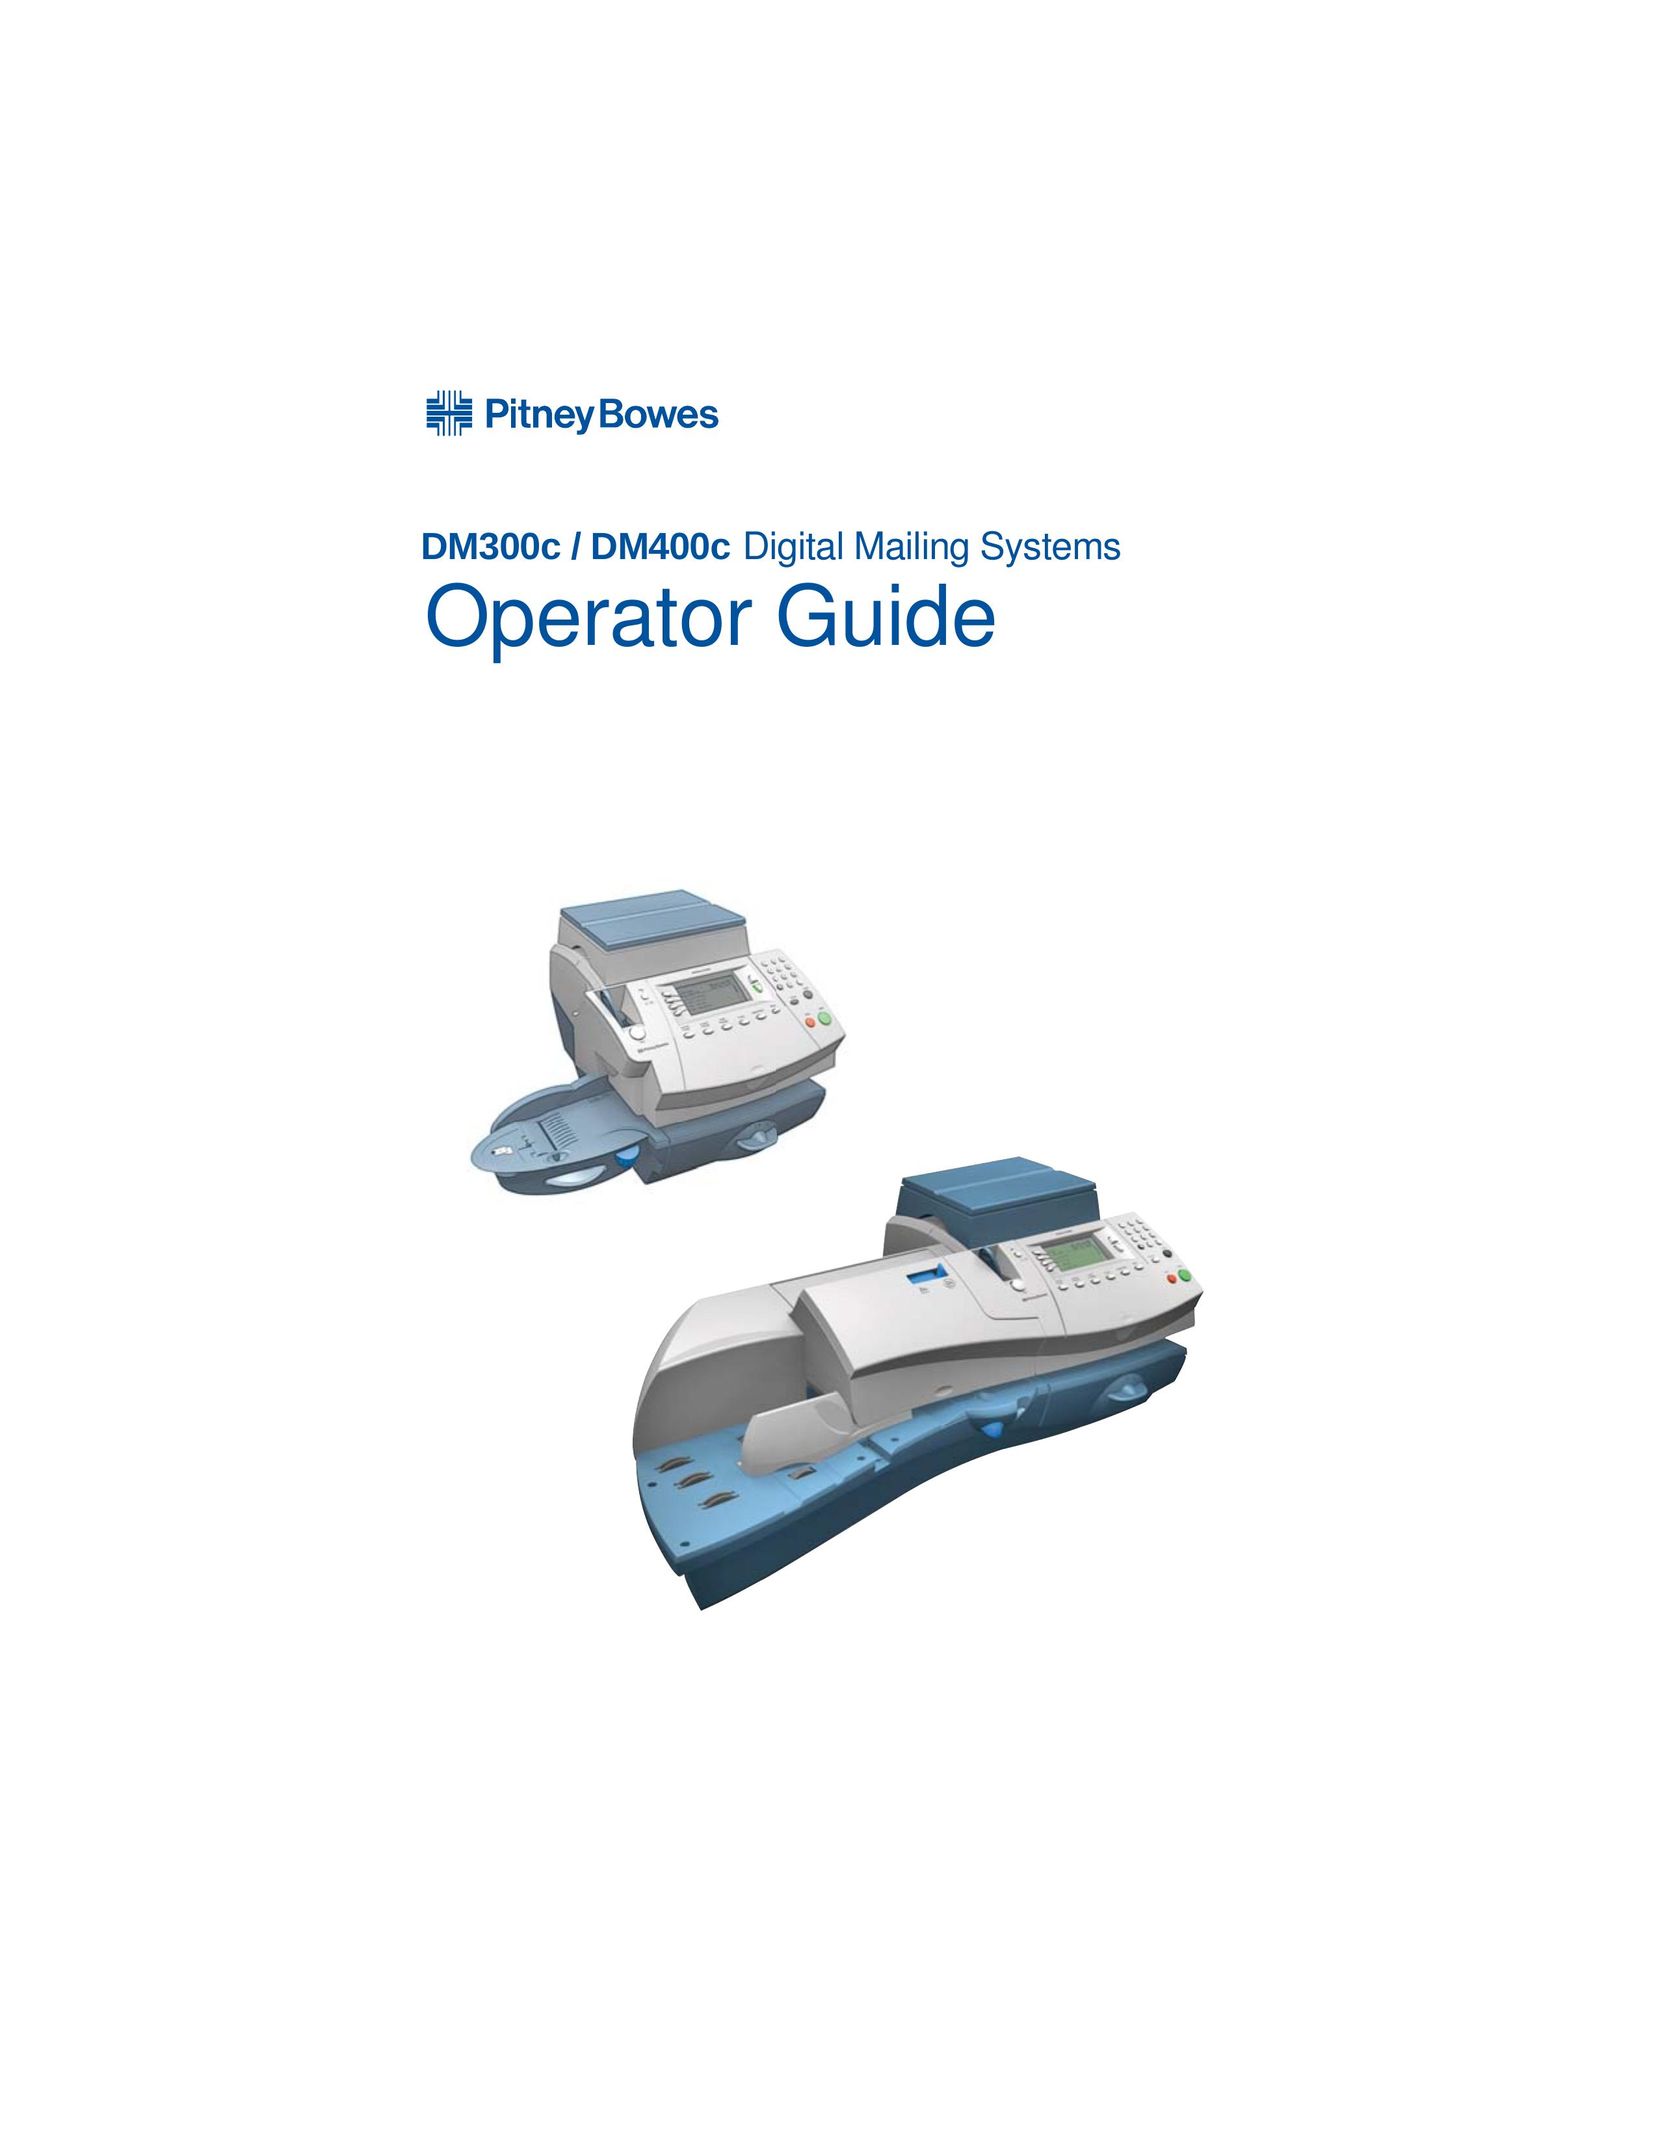 Pitney Bowes DM300C Postal Equipment User Manual